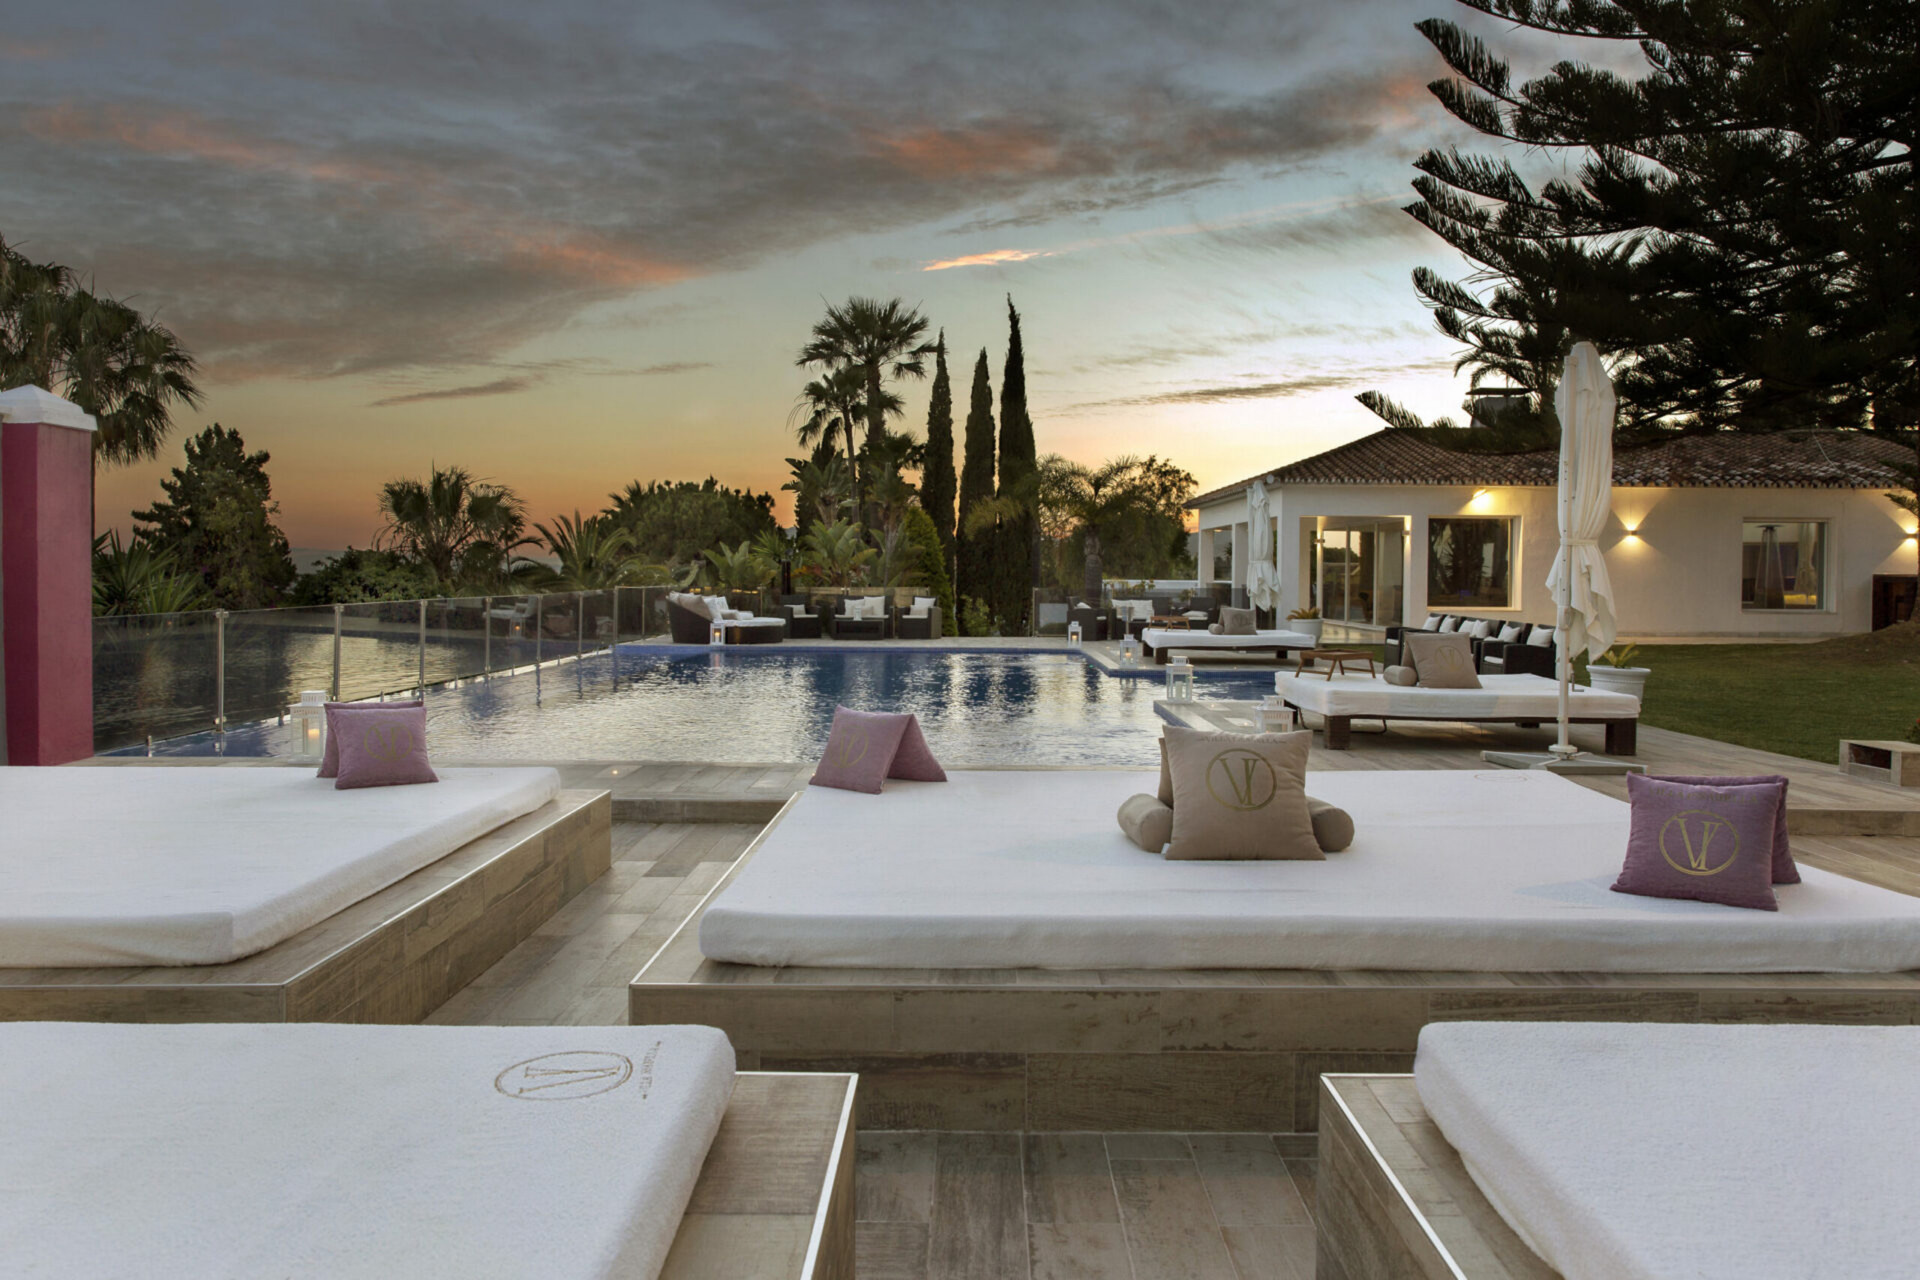 ARFV2337 - Unique opportunity for an exceptional luxury villa in Elviria - fo...